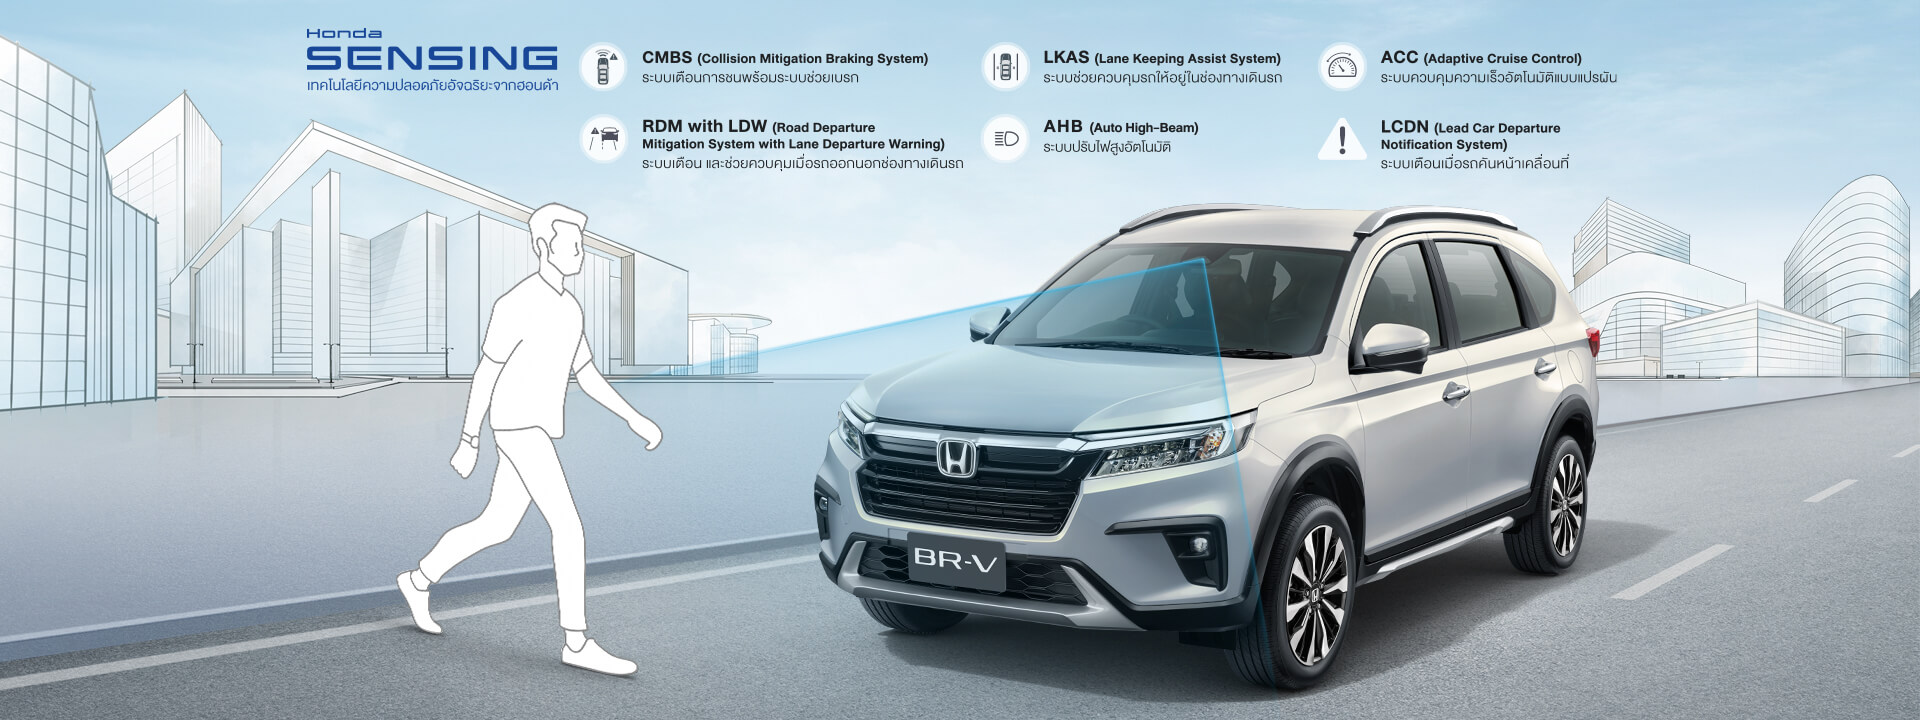 Honda SENSING เทคโนโลยีความปลอดภัยอัจฉริยะจากฮอนด้า มีใน All-new Honda BR-V ทุกรุ่นย่อย